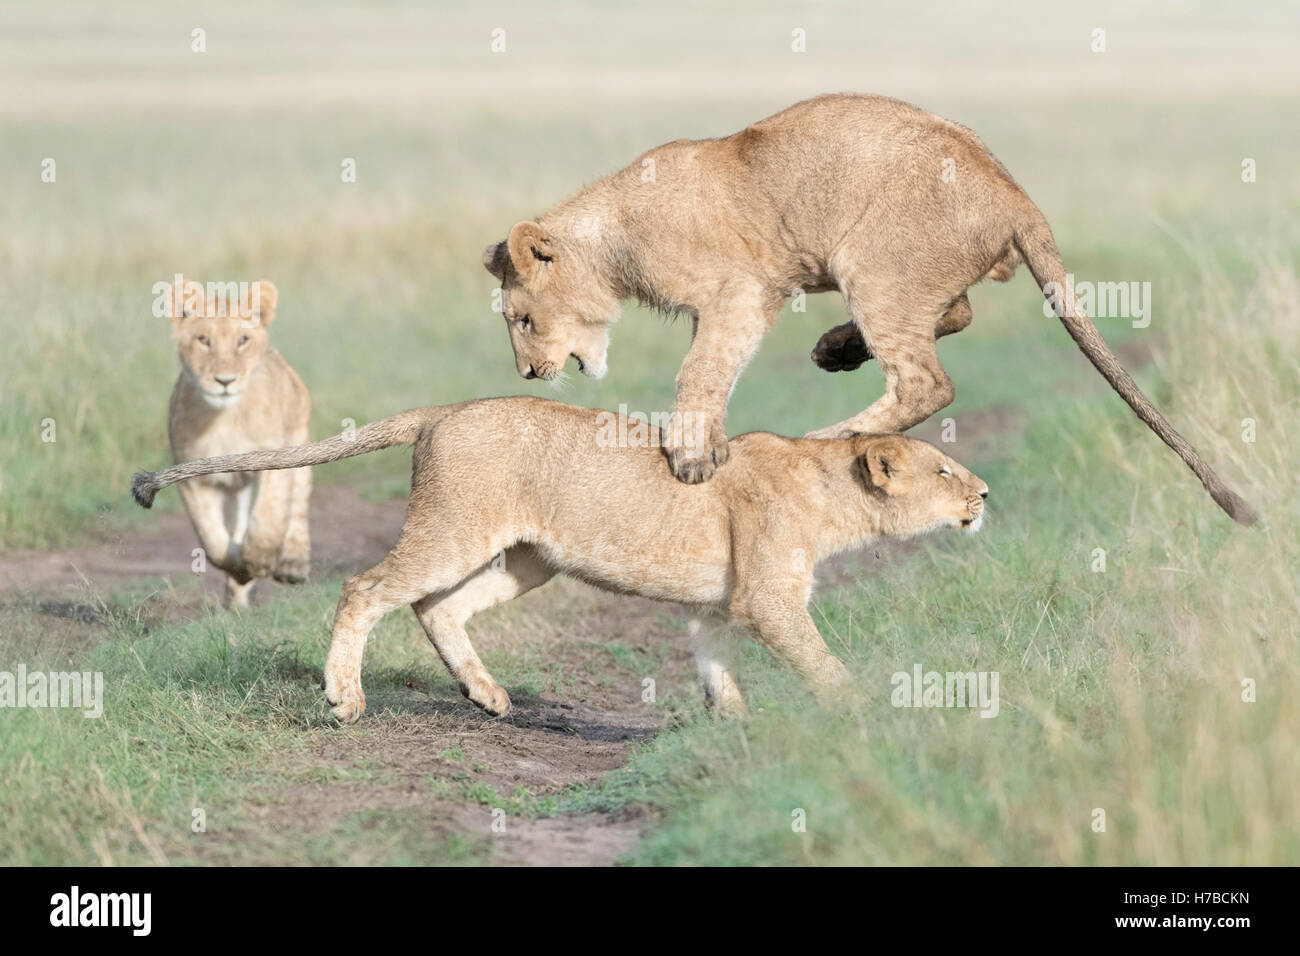 Young lions (Panthera leo) playing together, Maasai Mara national reserve, Kenya Stock Photo